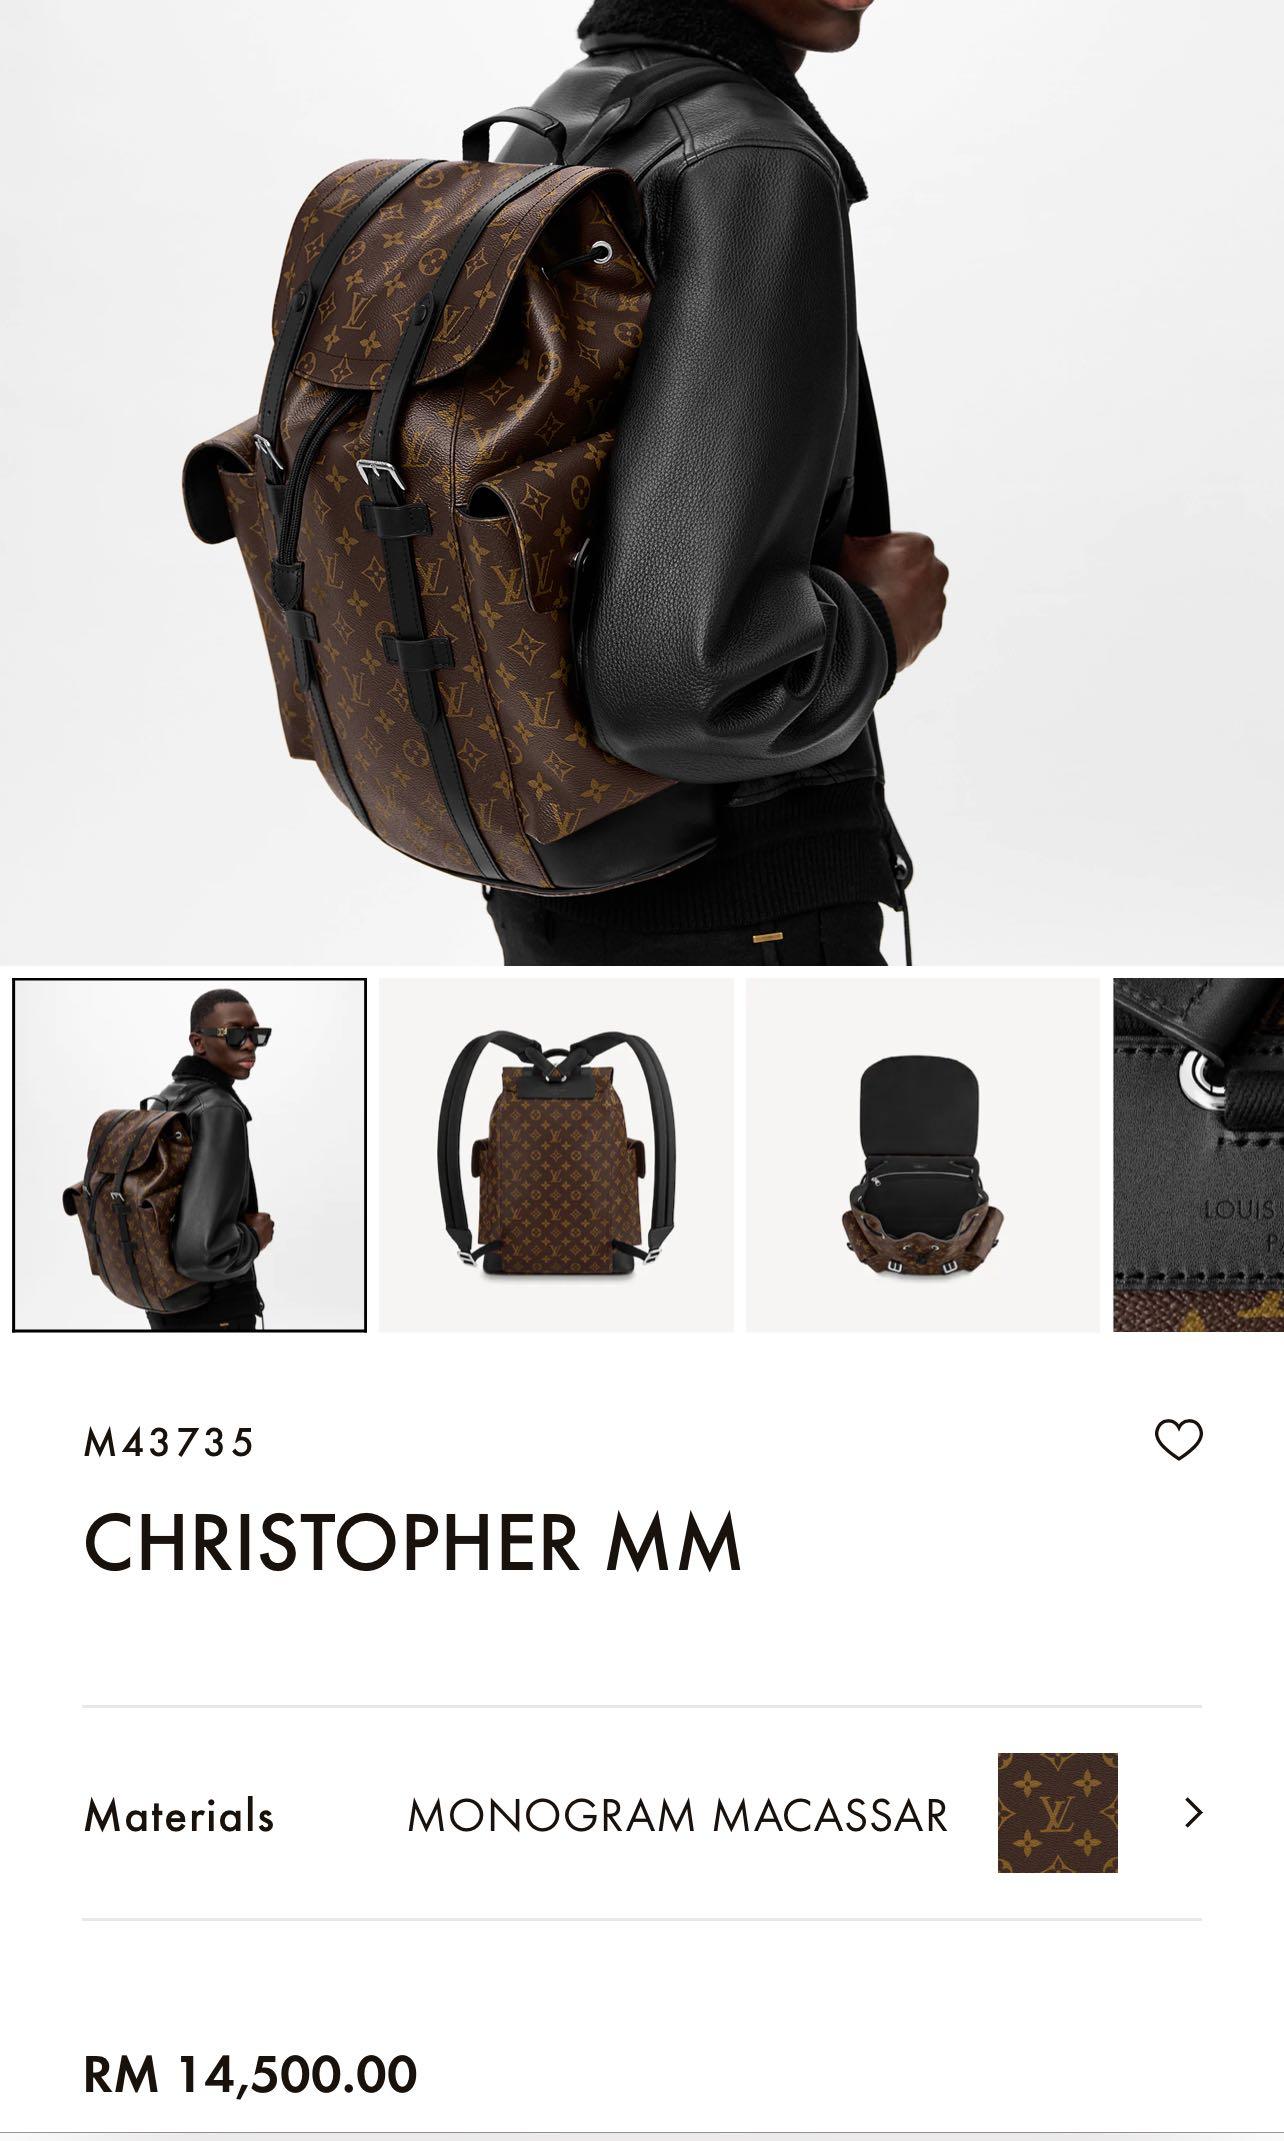 Christopher MM Backpack Monogram Macassar Canvas - Travel M43735